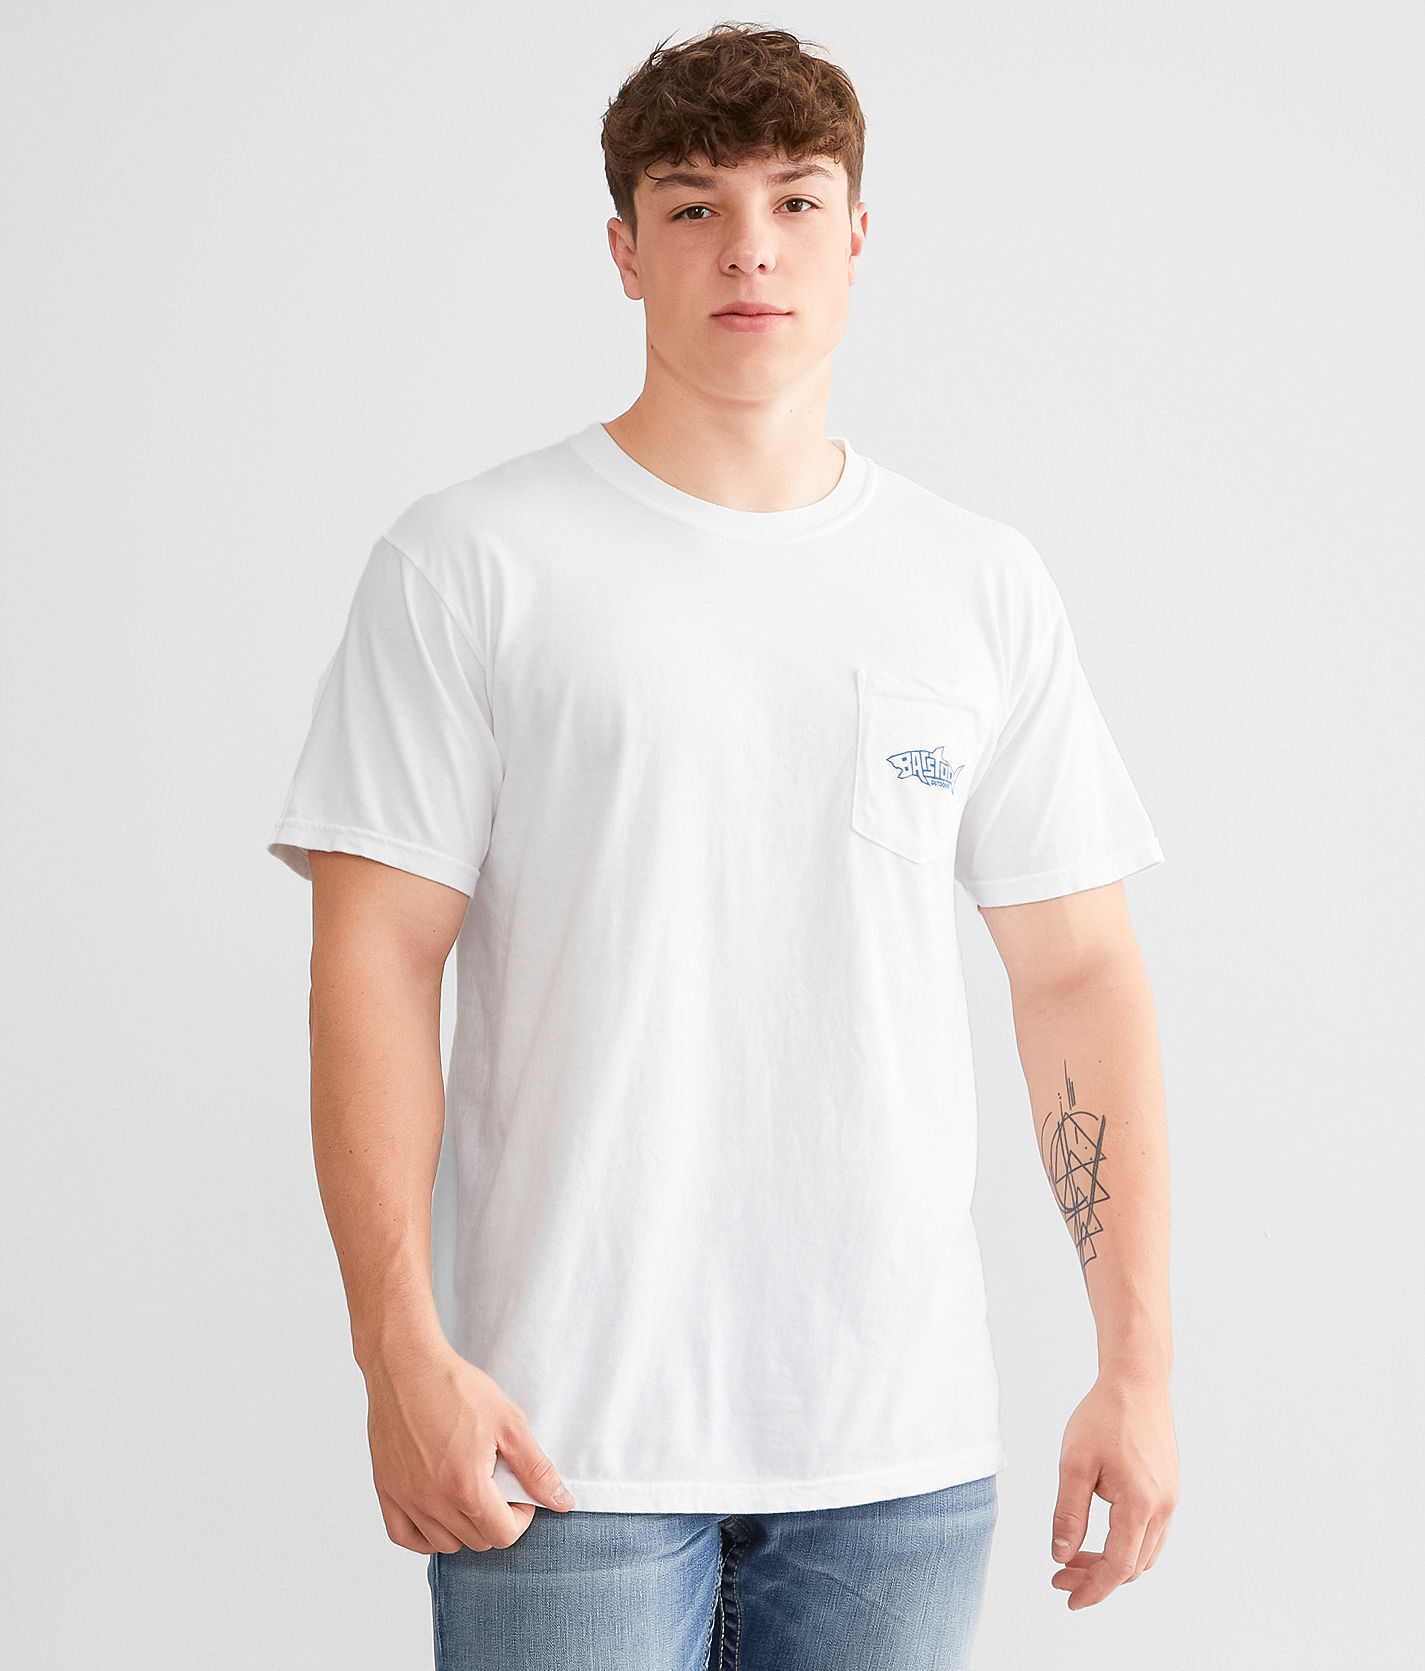 Barstool Sports Outdoors Shark T-Shirt  - White - male - Size: Extra Large